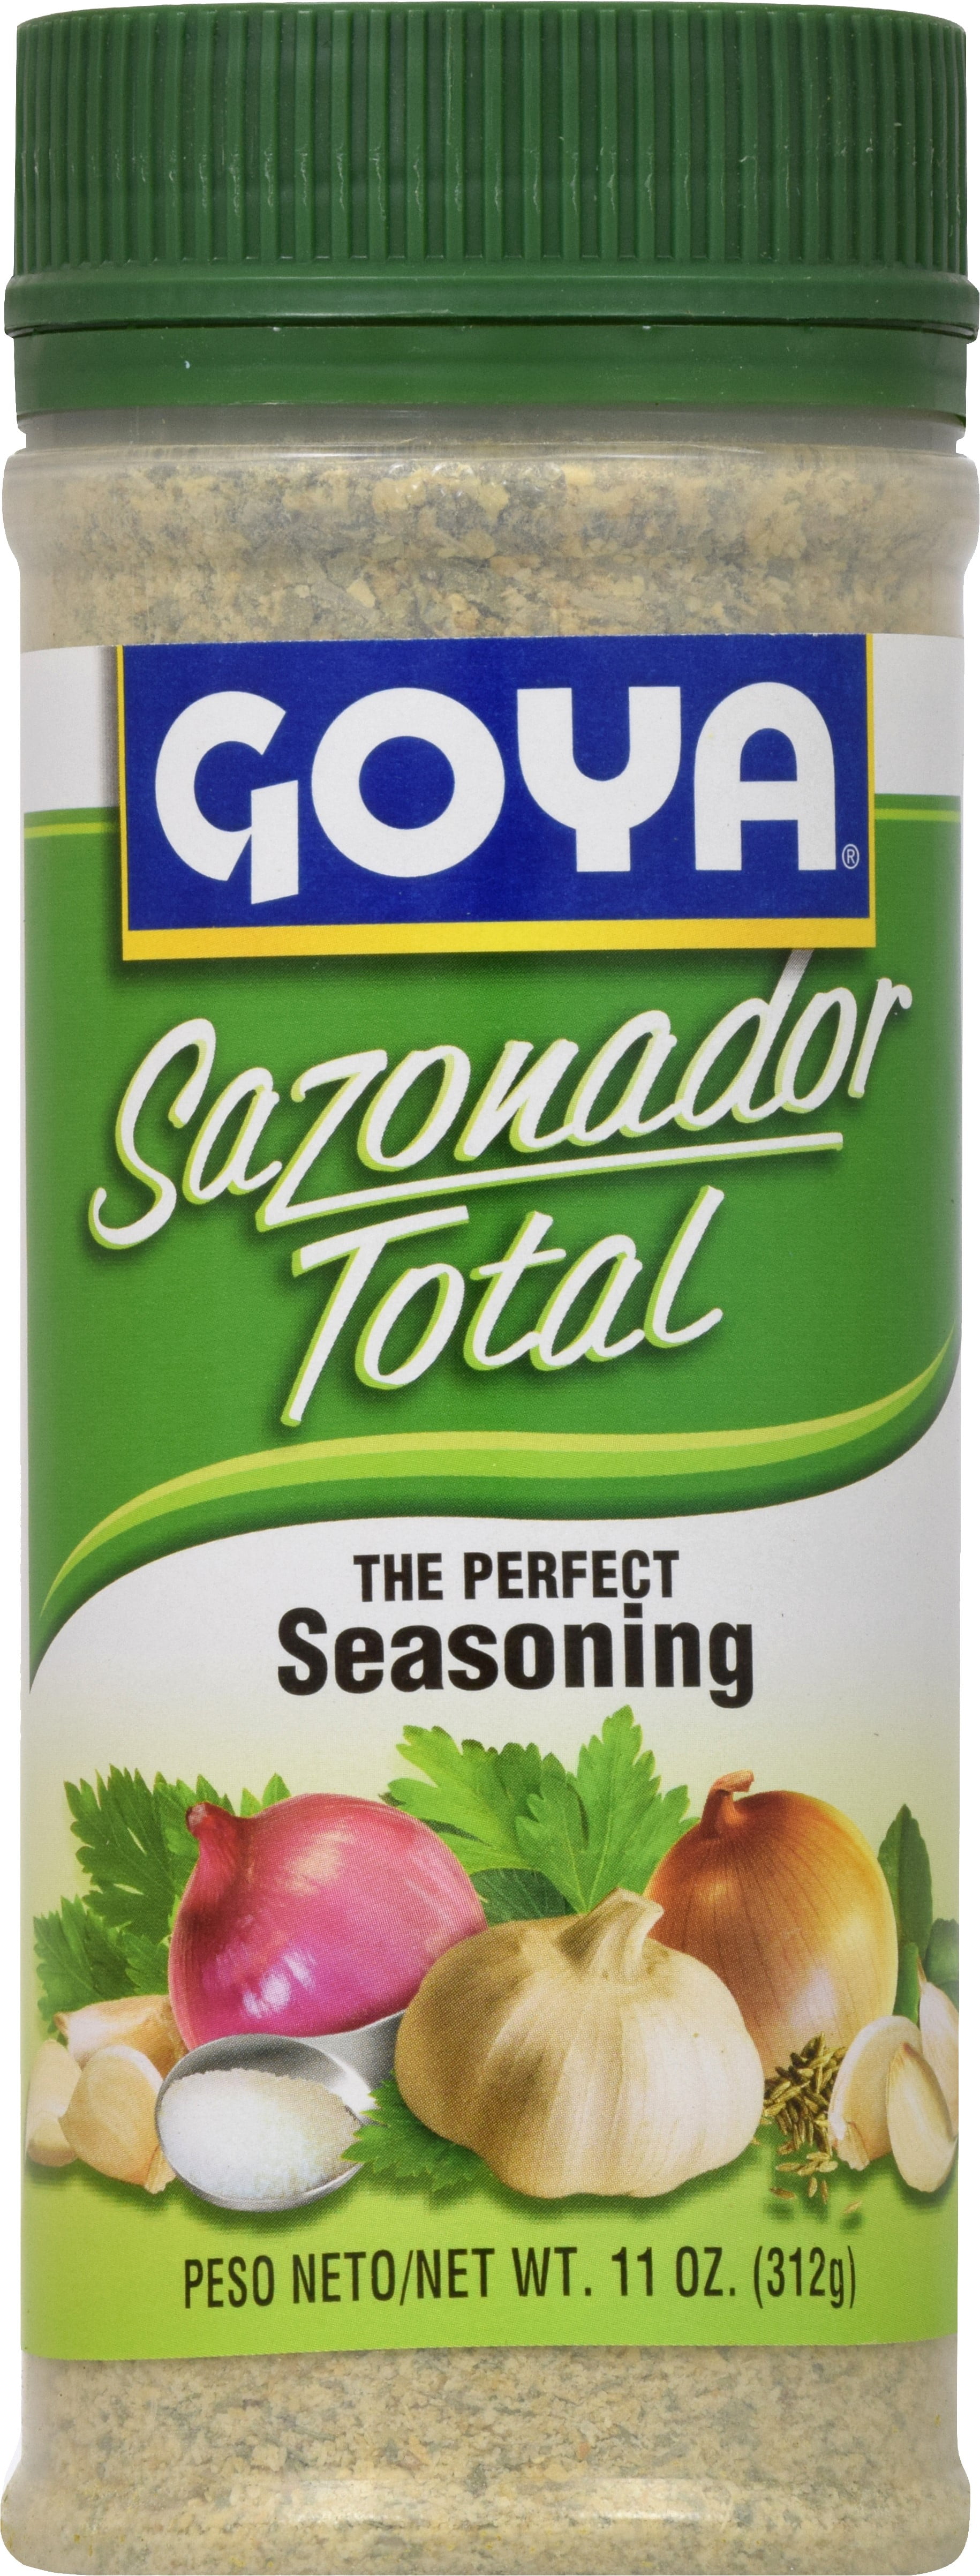 Goya Sazonador Total The Perfect Seasoning, 11.0 OZ